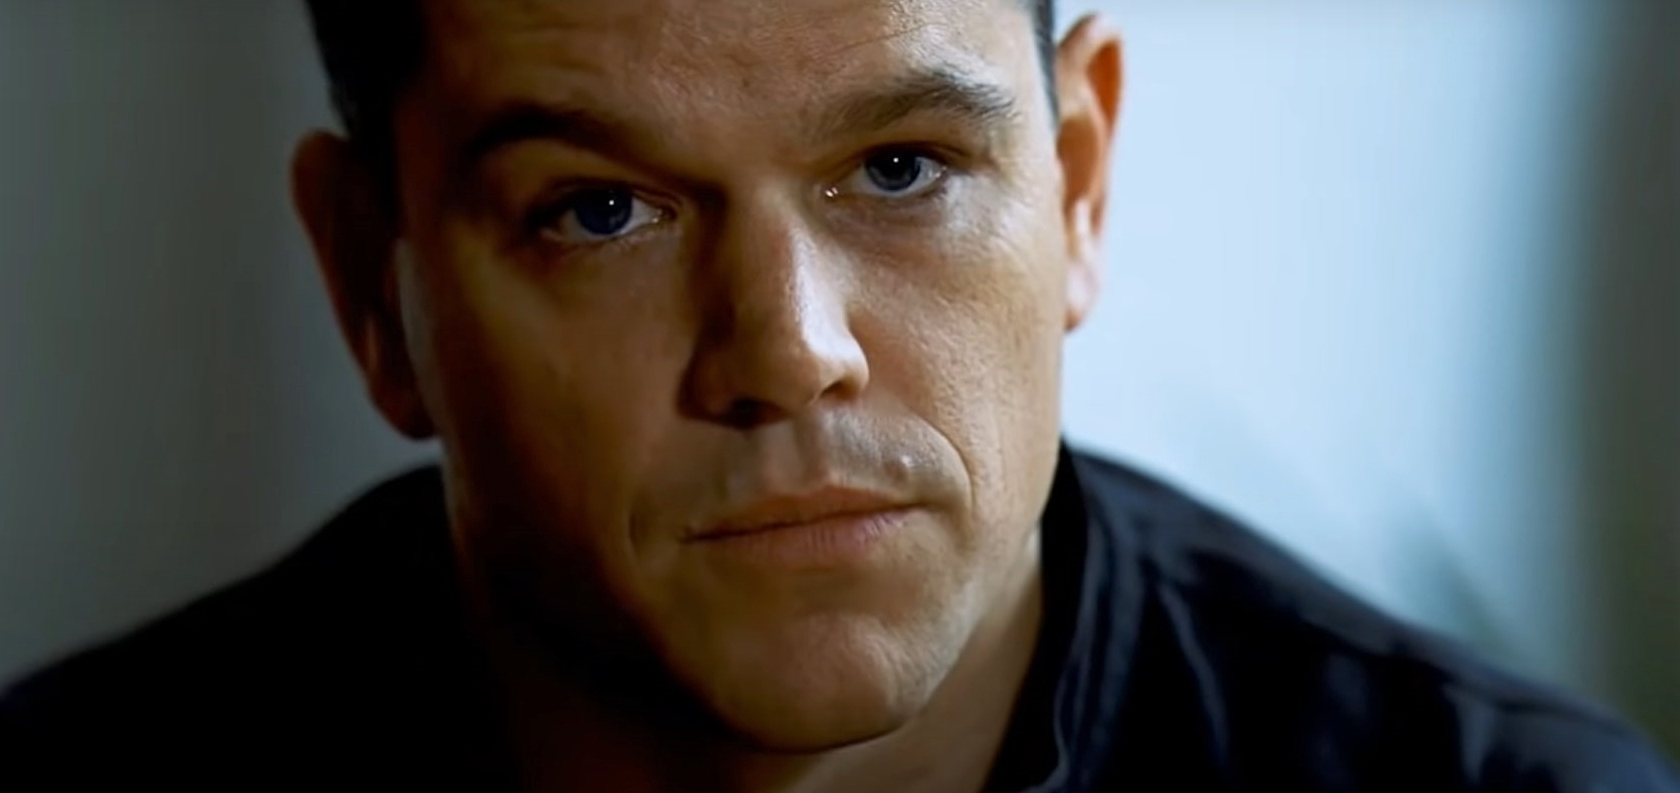 Where Was The Bourne Ultimatum Filmed?